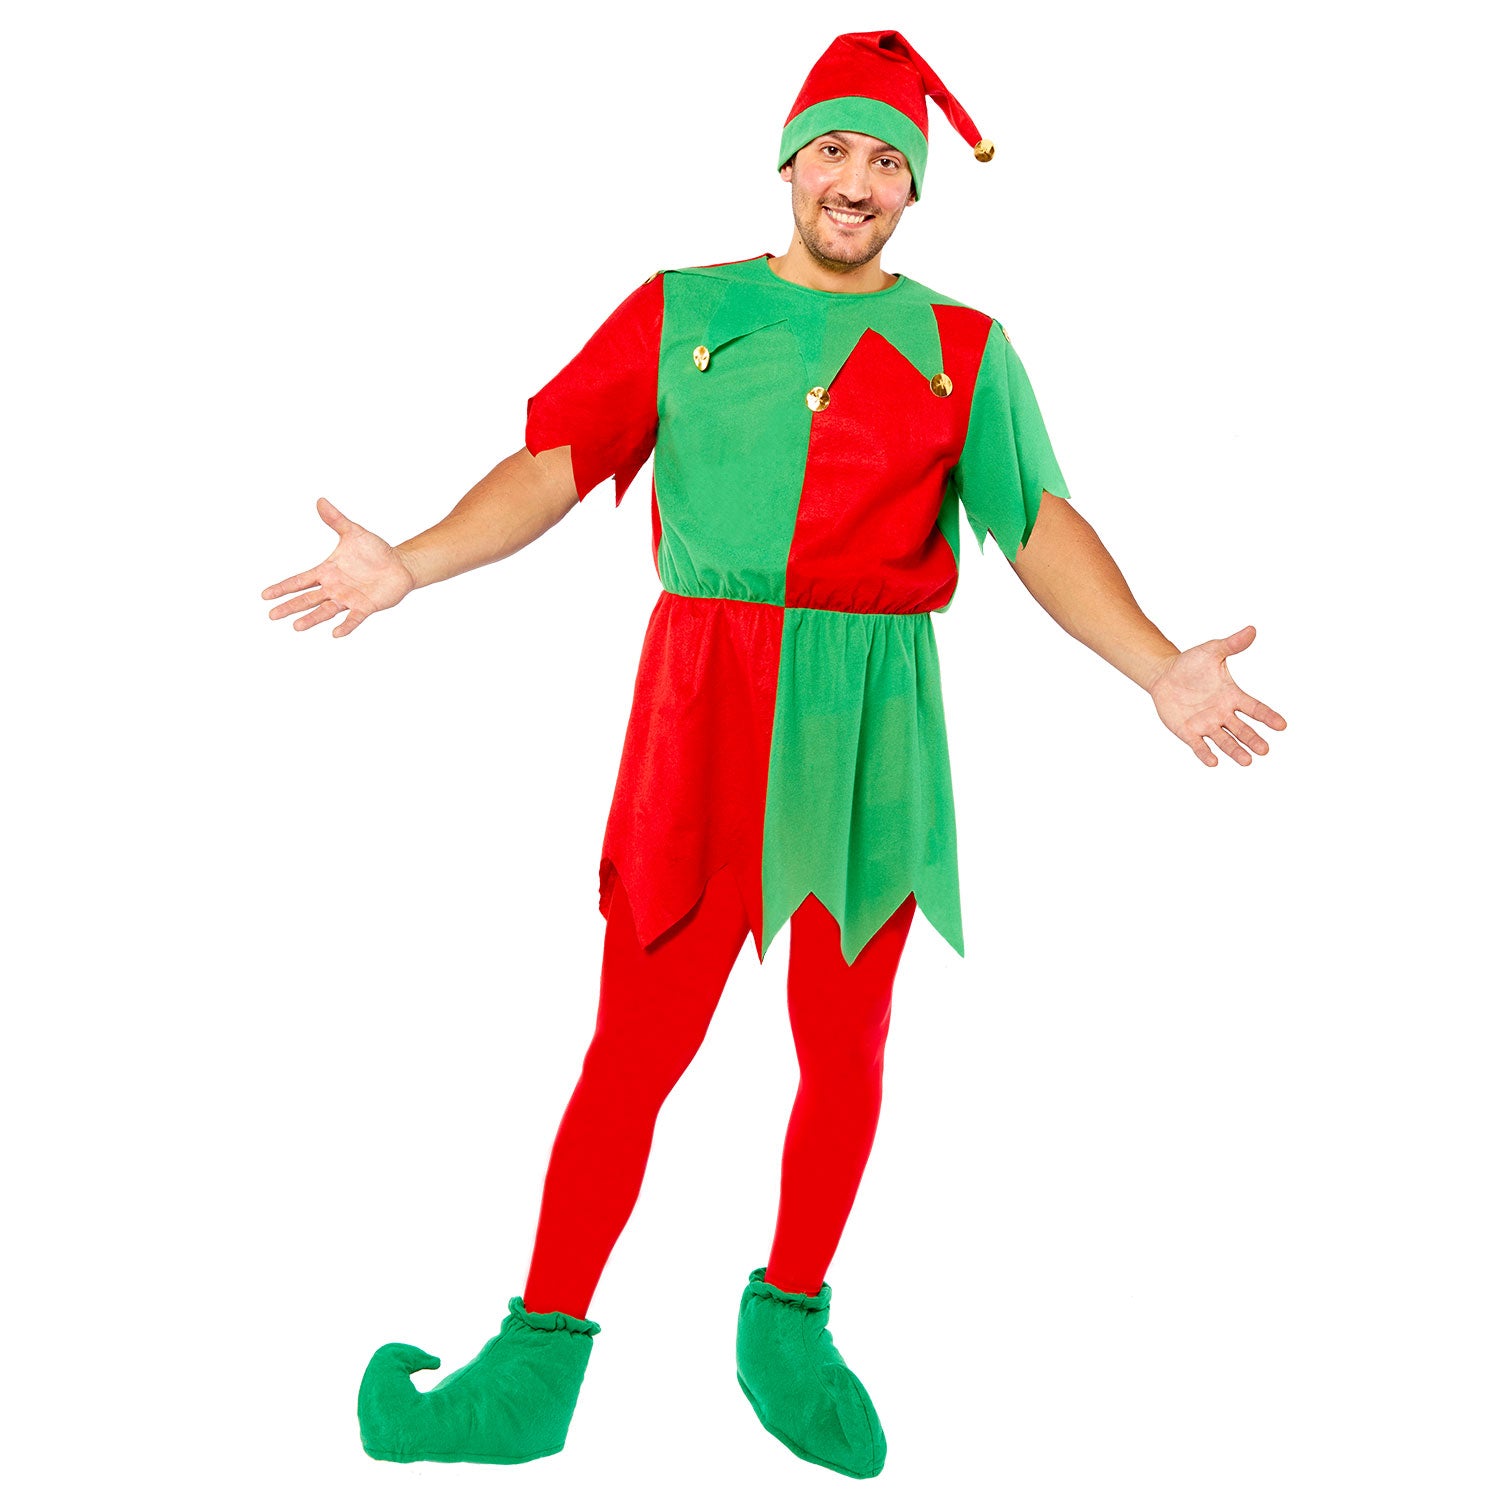 Gents' Basic Elf Costume